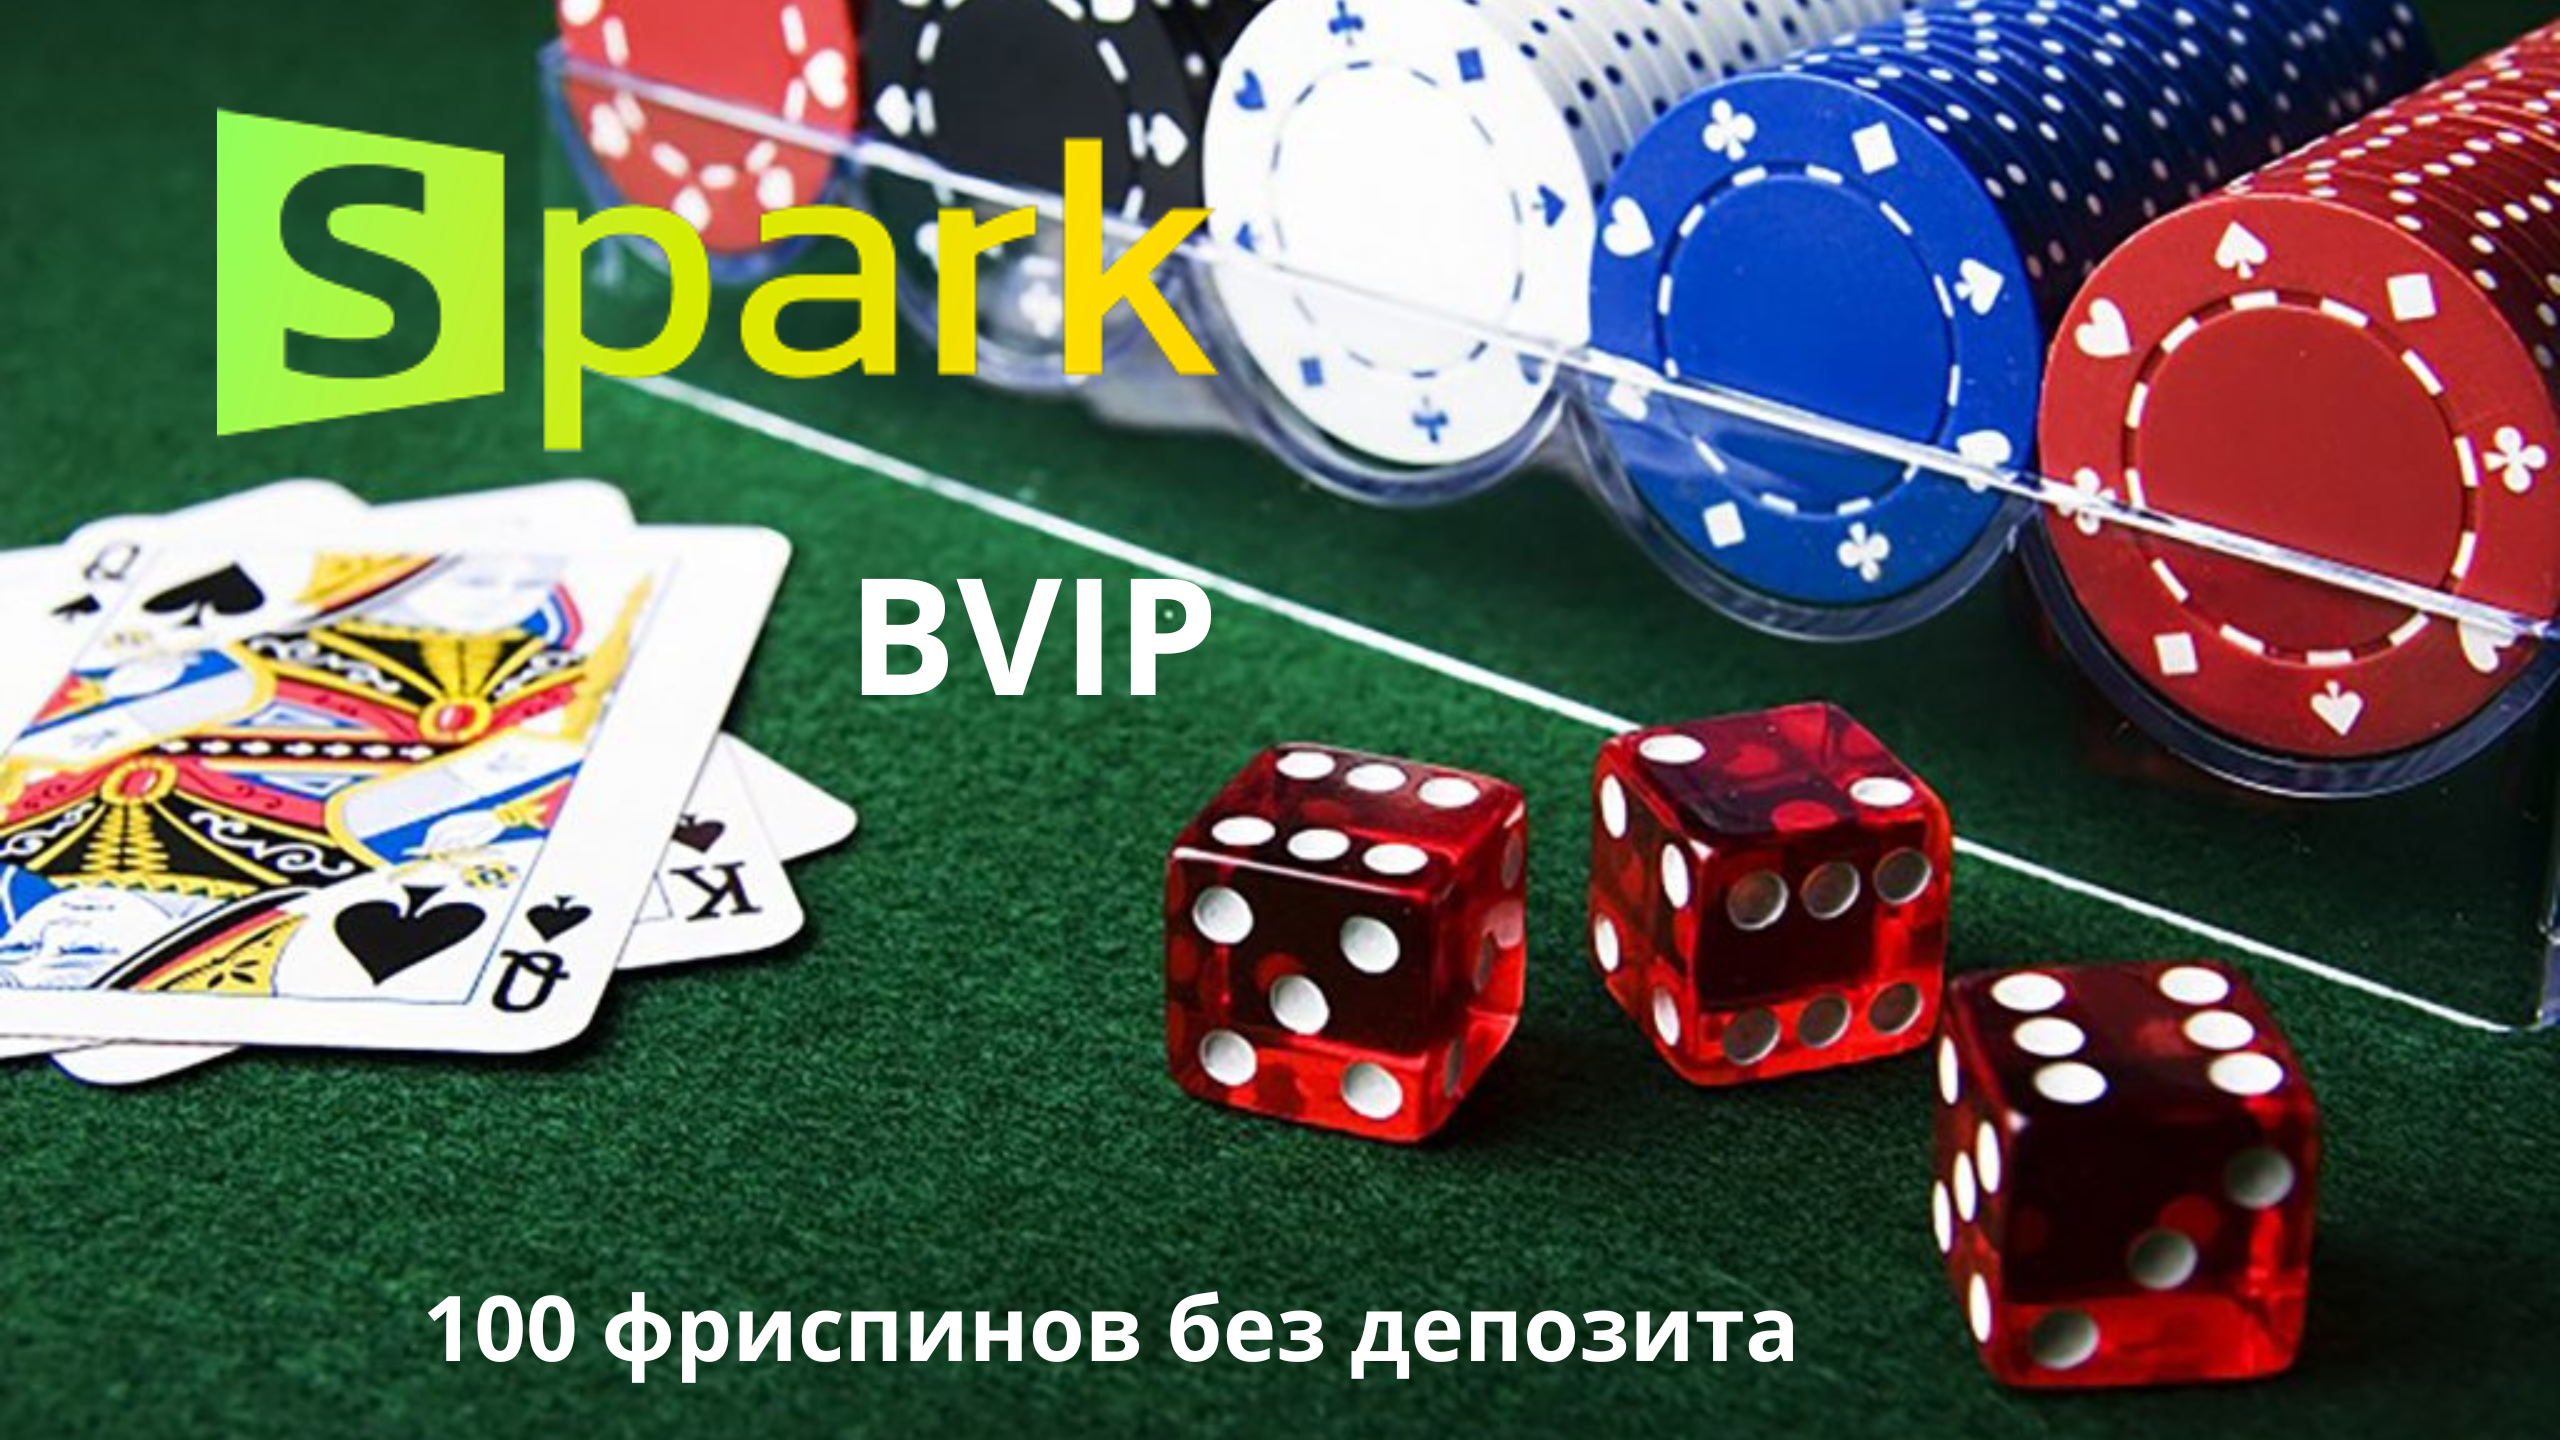 Spark casino войти